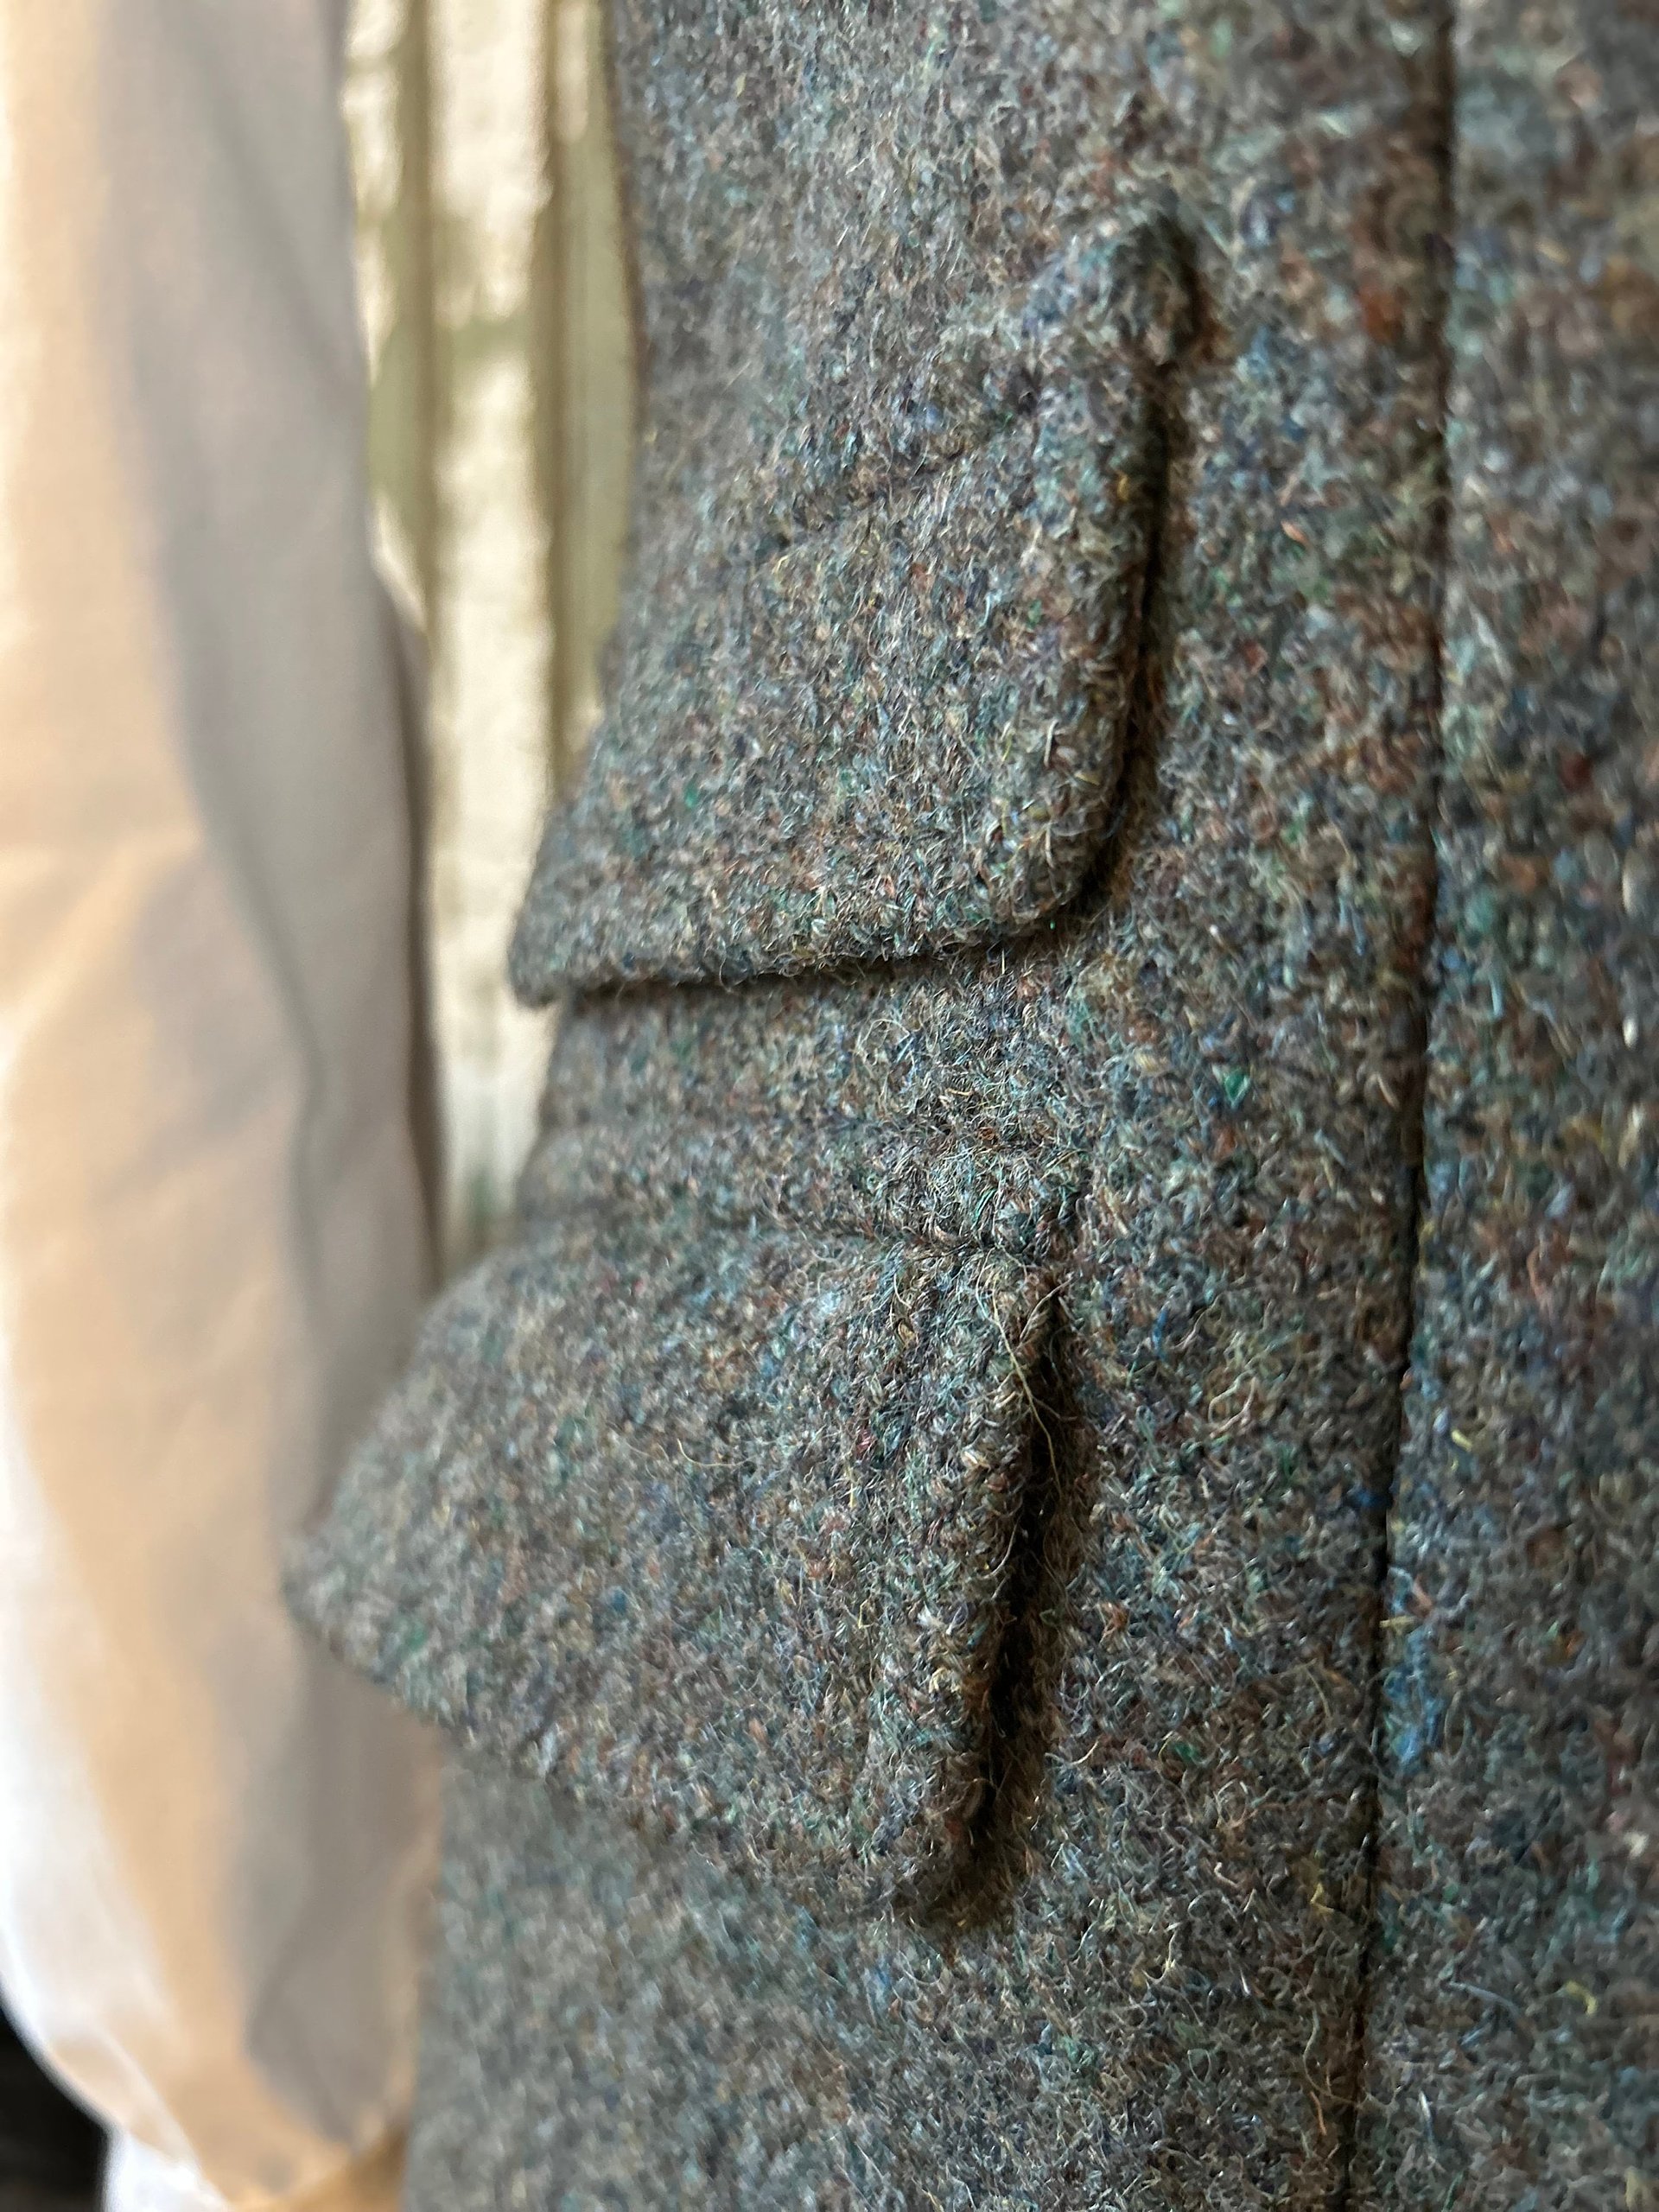 Harris Tweed Sage Green Vest, Sleeveless Blazer, Classic British Style, Size S/M